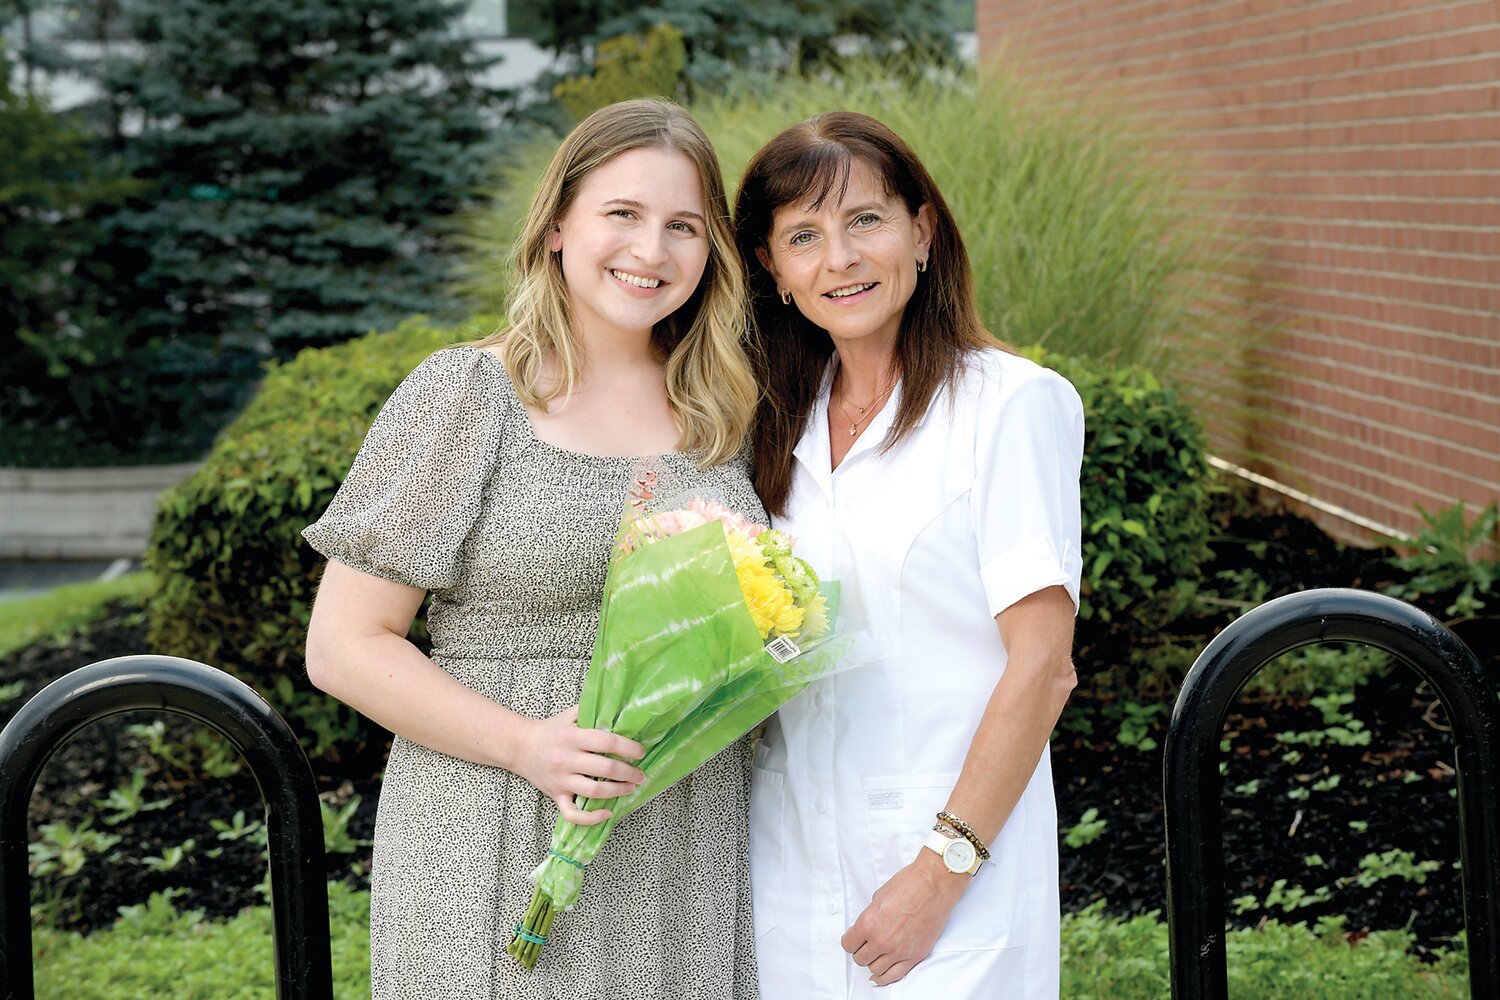 Anna Uyechko and her mother, Tetyana, are both graduates of St. Luke’s School of Nursing.